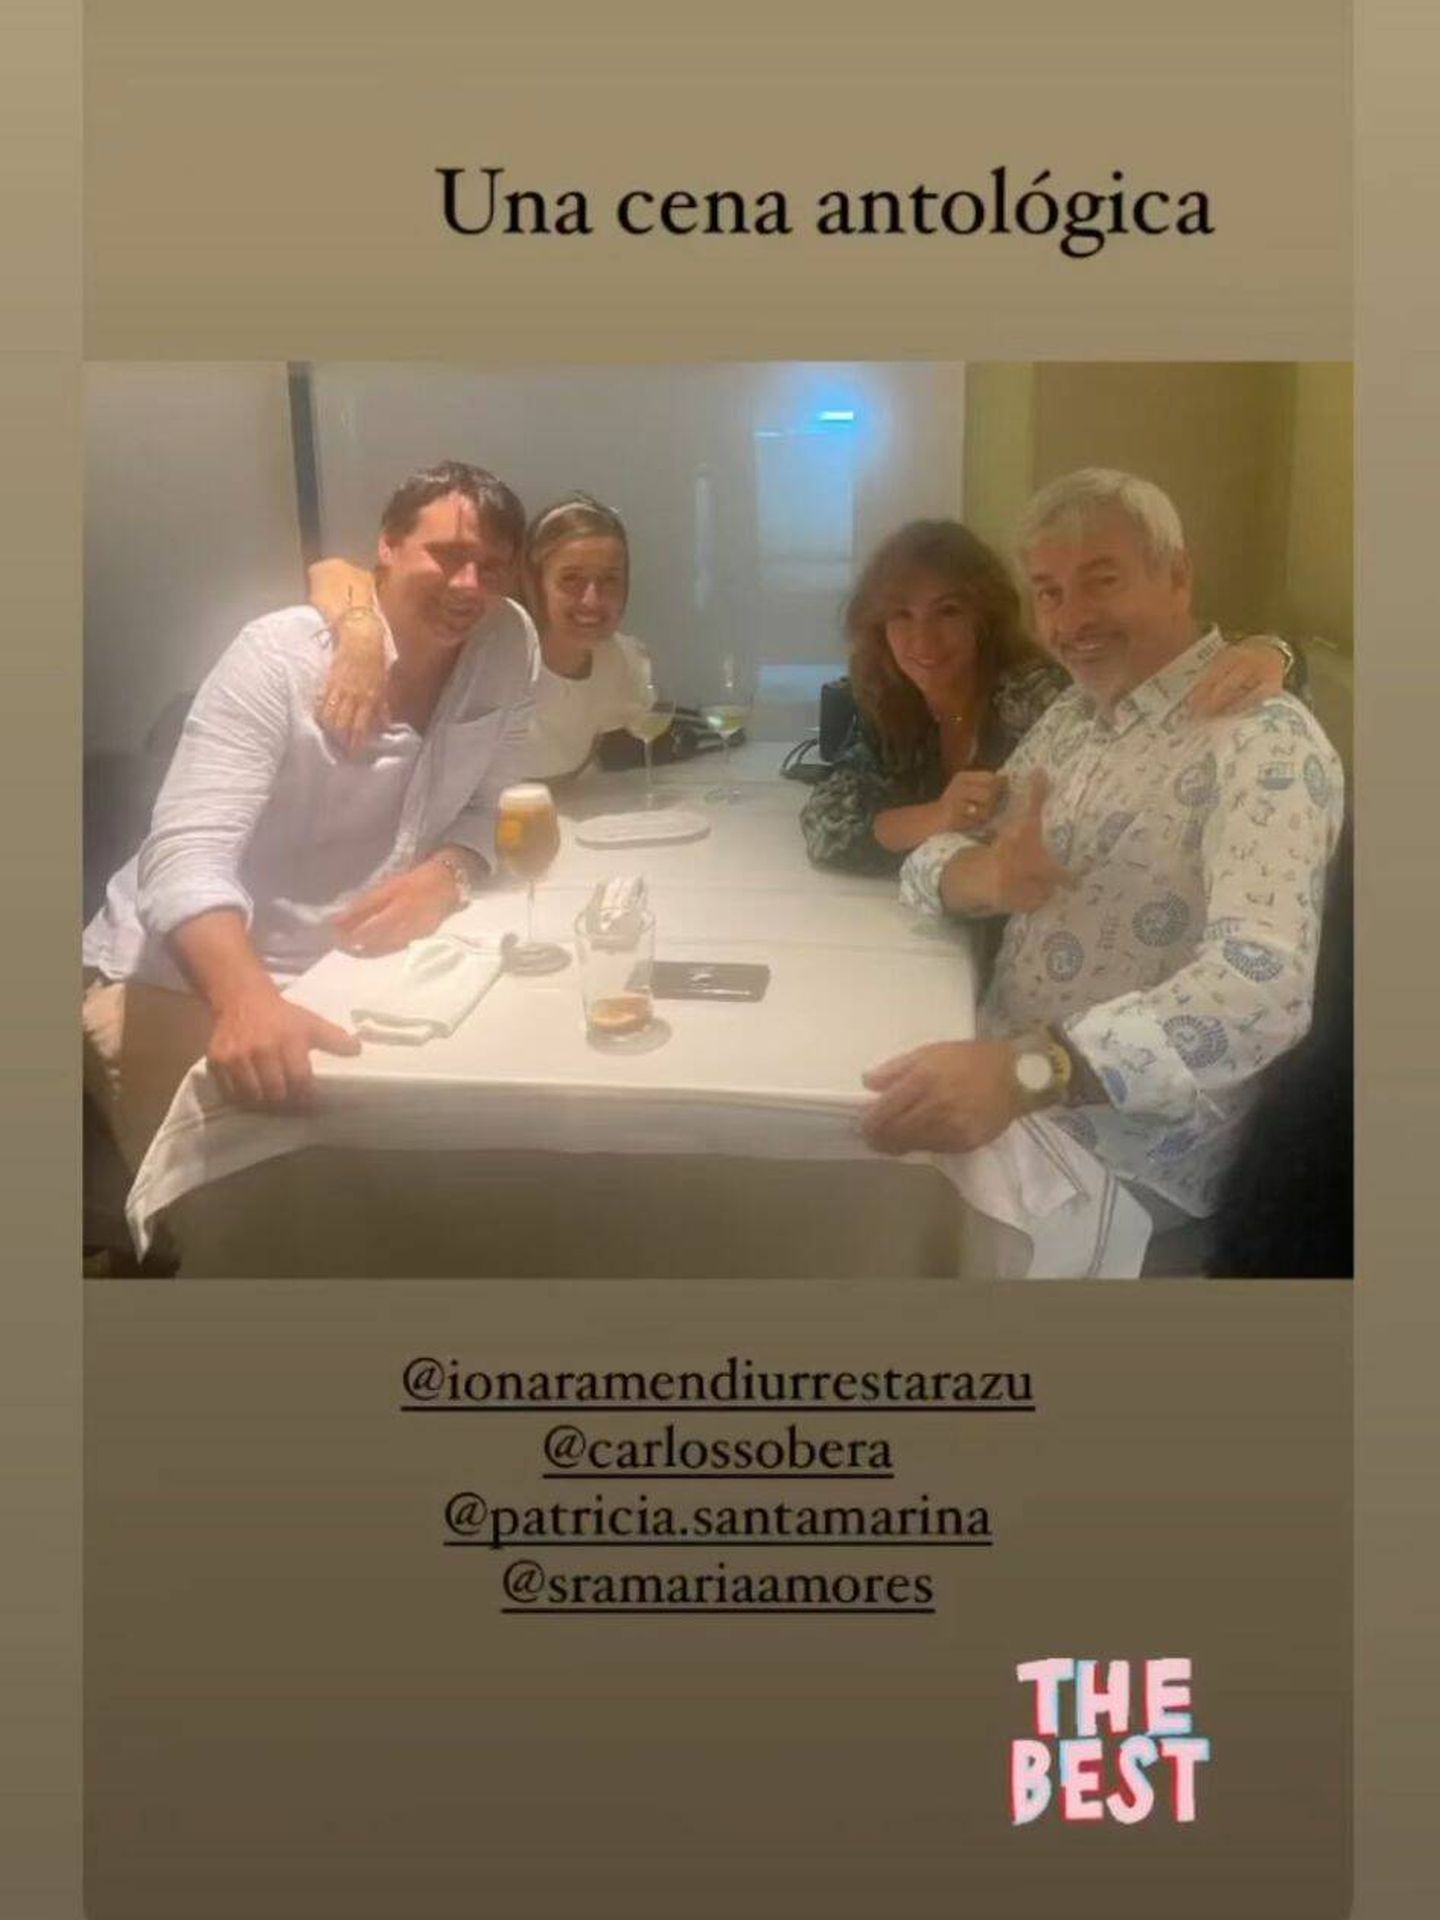 Carlos Sobera e Ion Aramendi con sus parejas cenando. (Instagram/@ionaramendiurrestarazu)